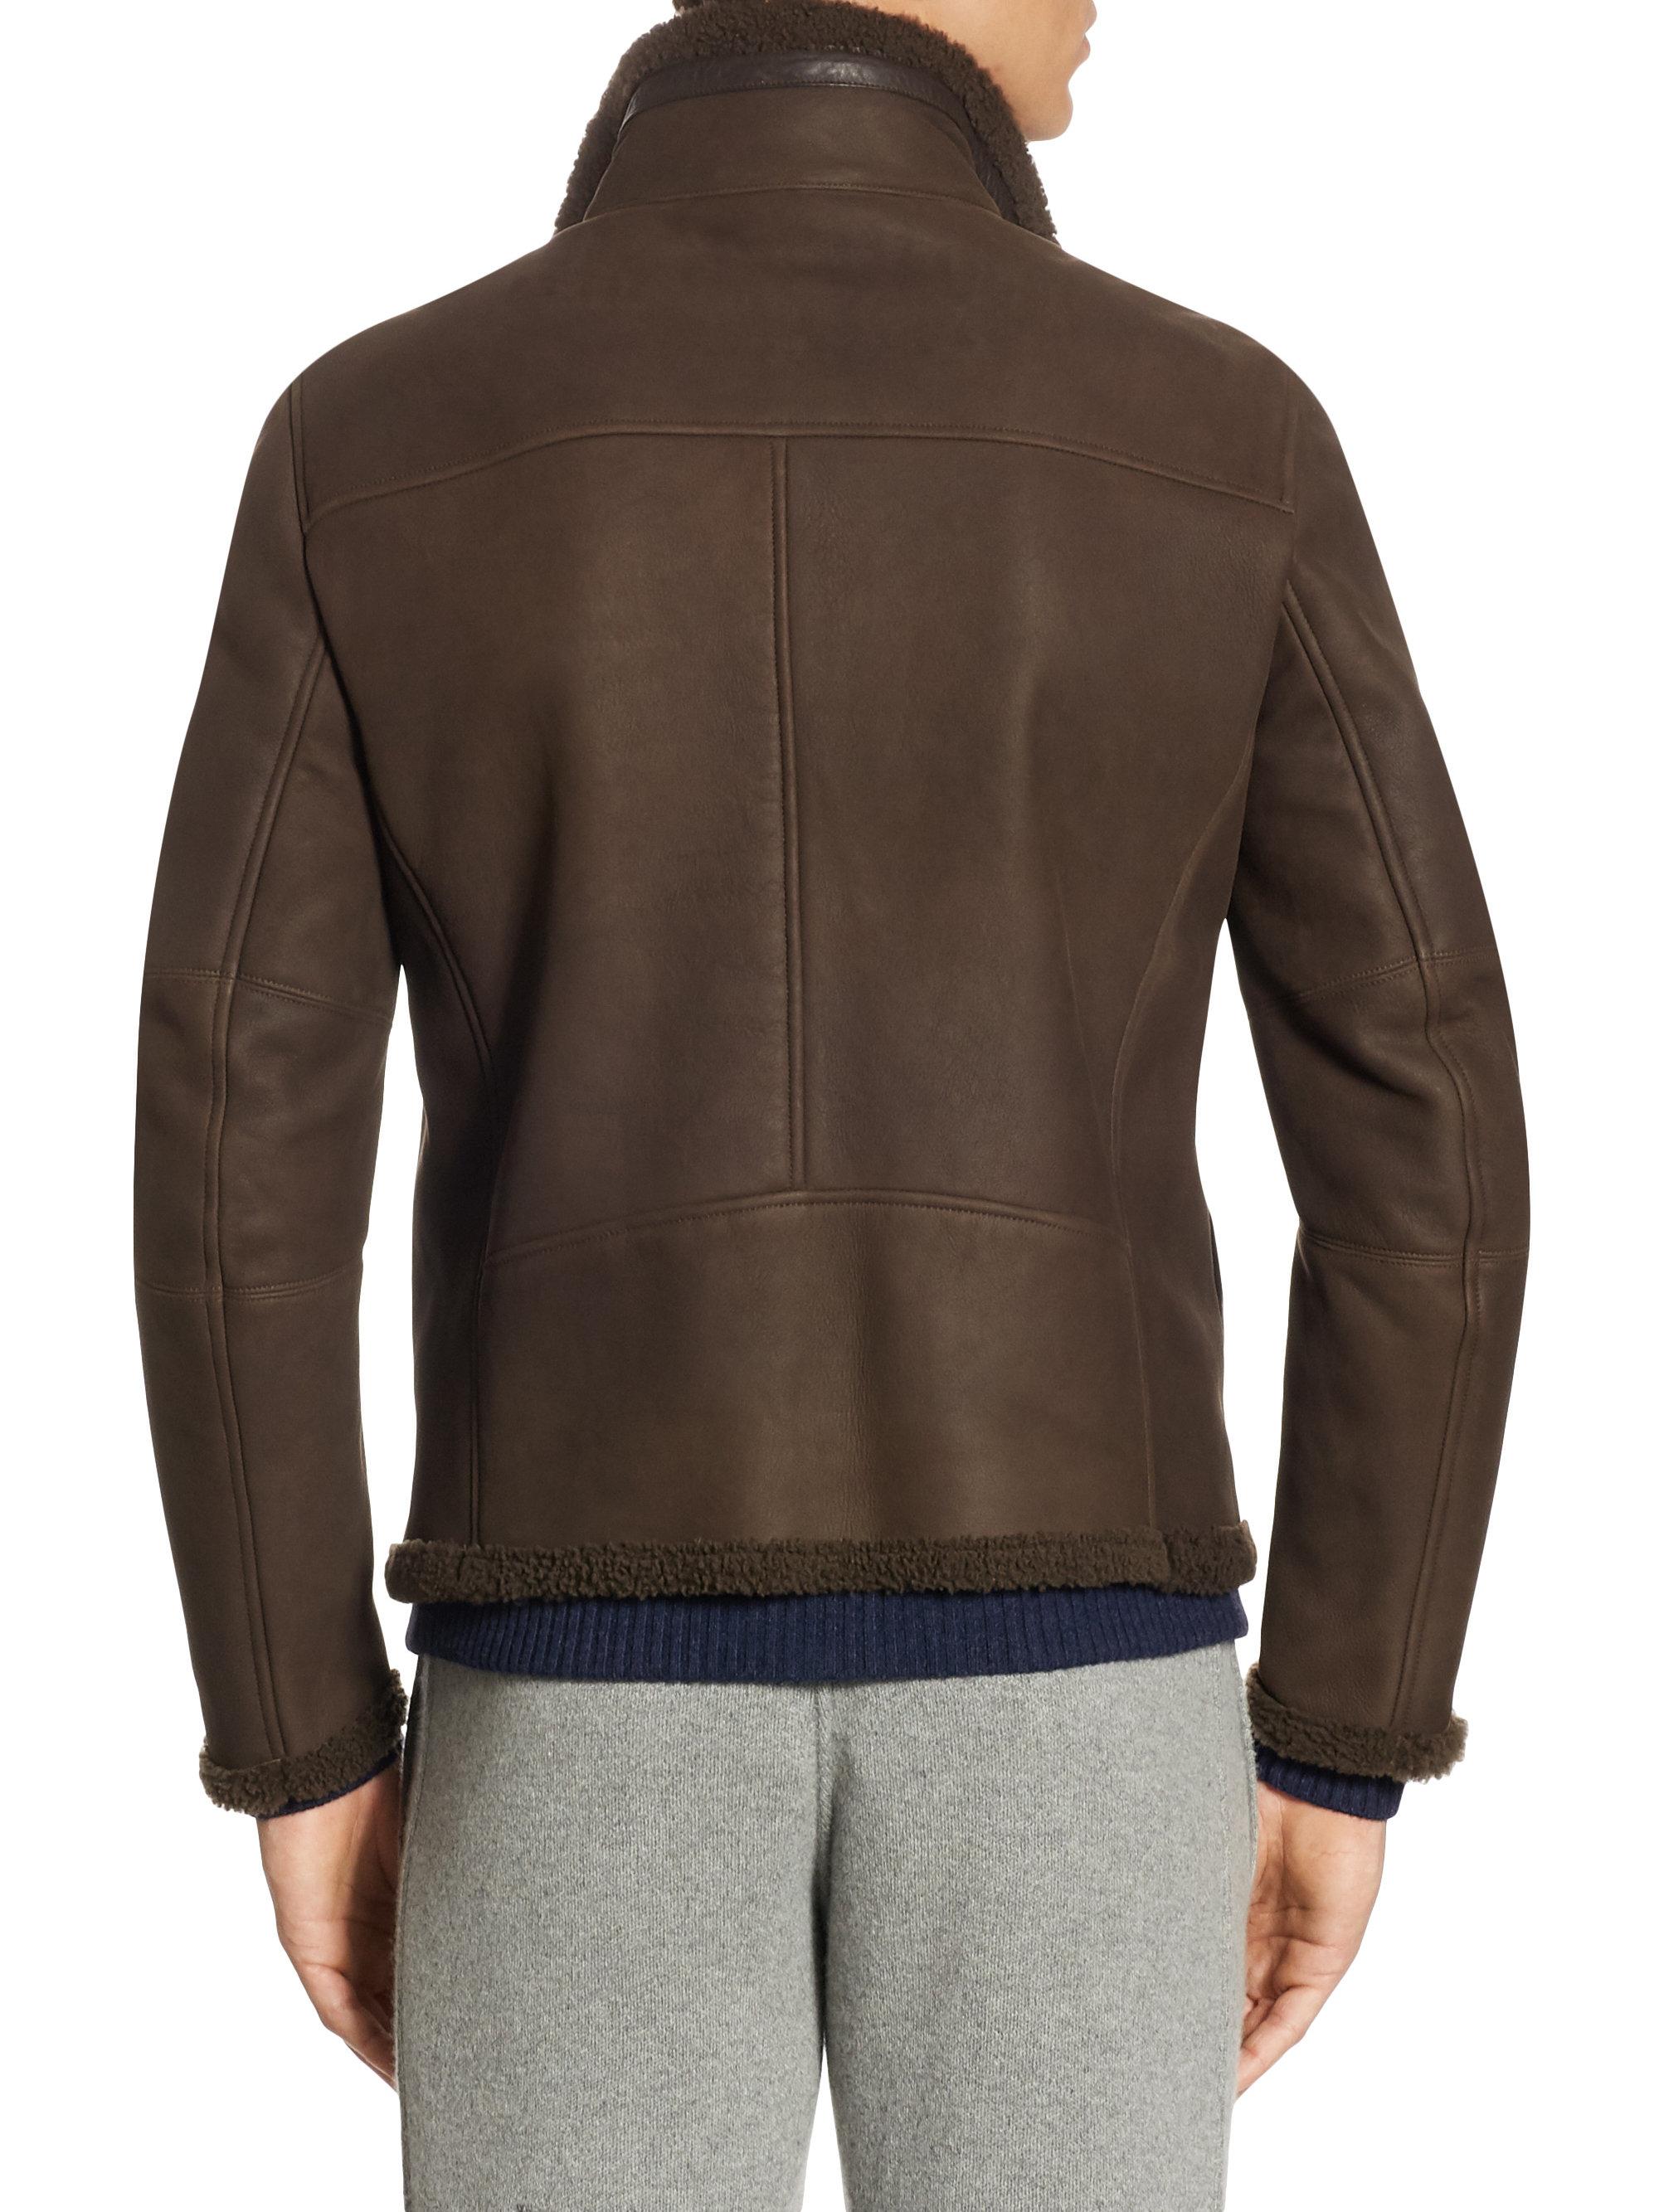 Loro Piana Leather Worthfield Shearling Jacket in Brown for Men - Lyst